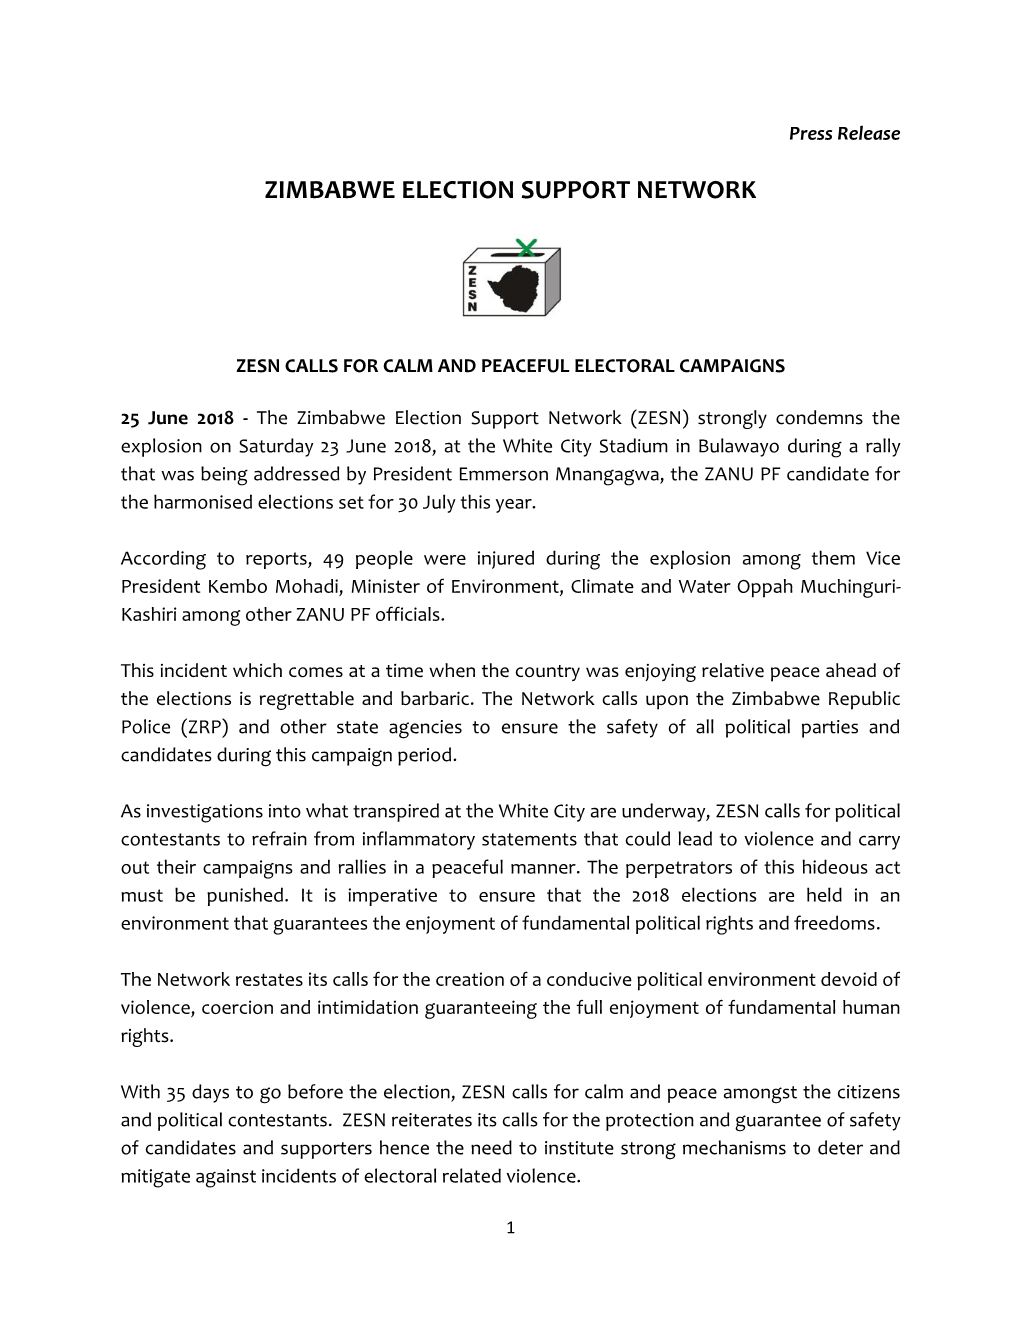 Zimbabwe Election Support Network